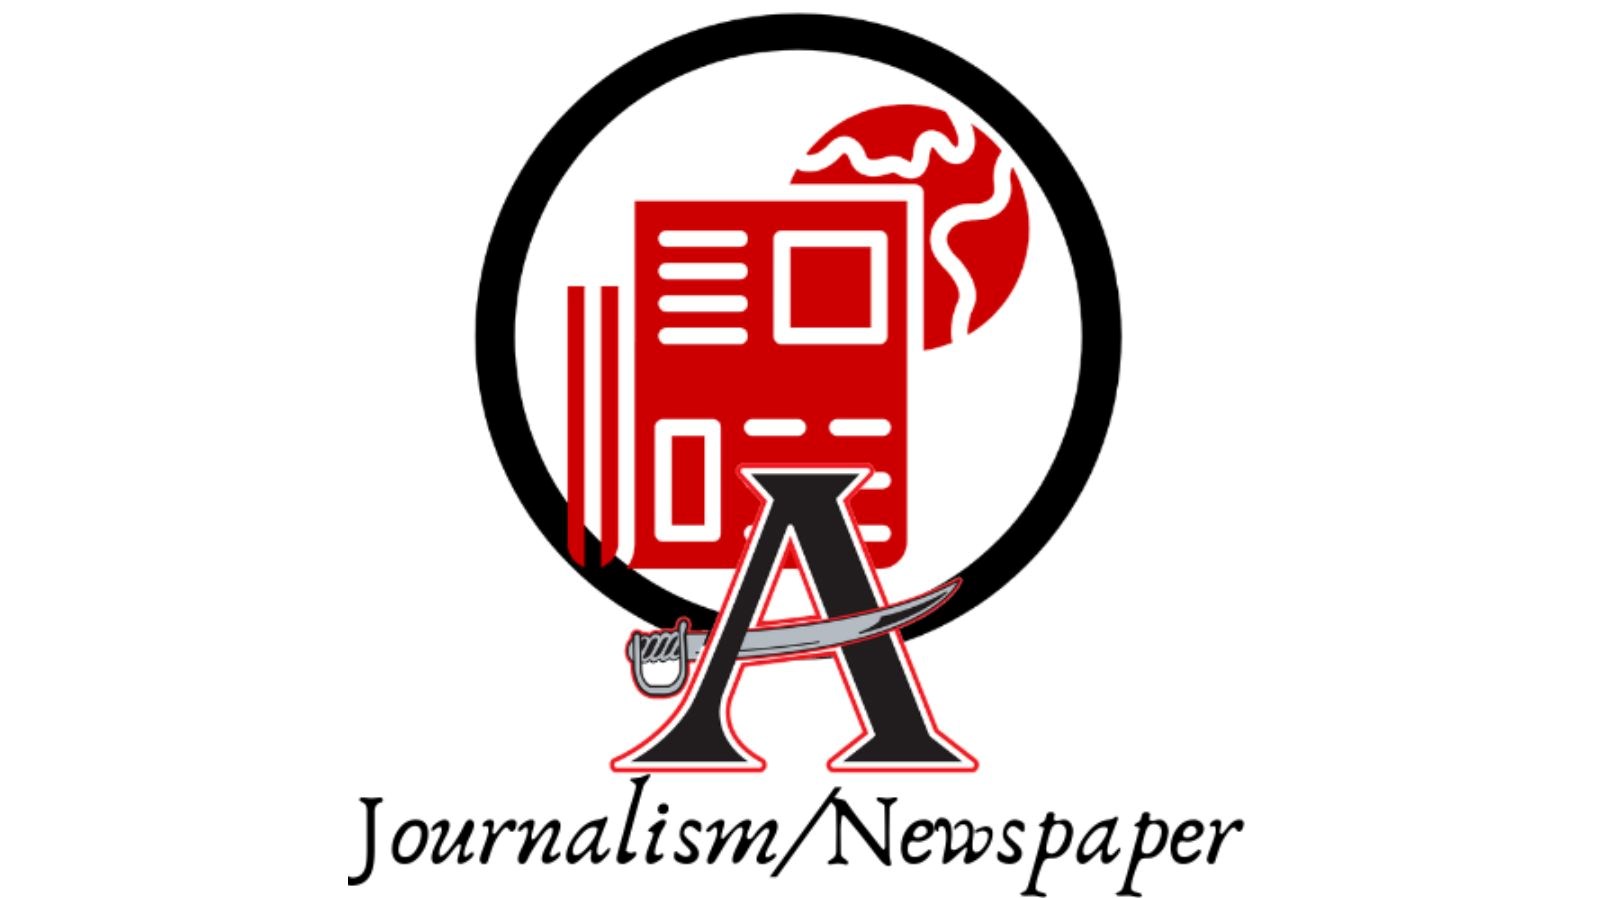 Newspaper/Journalism